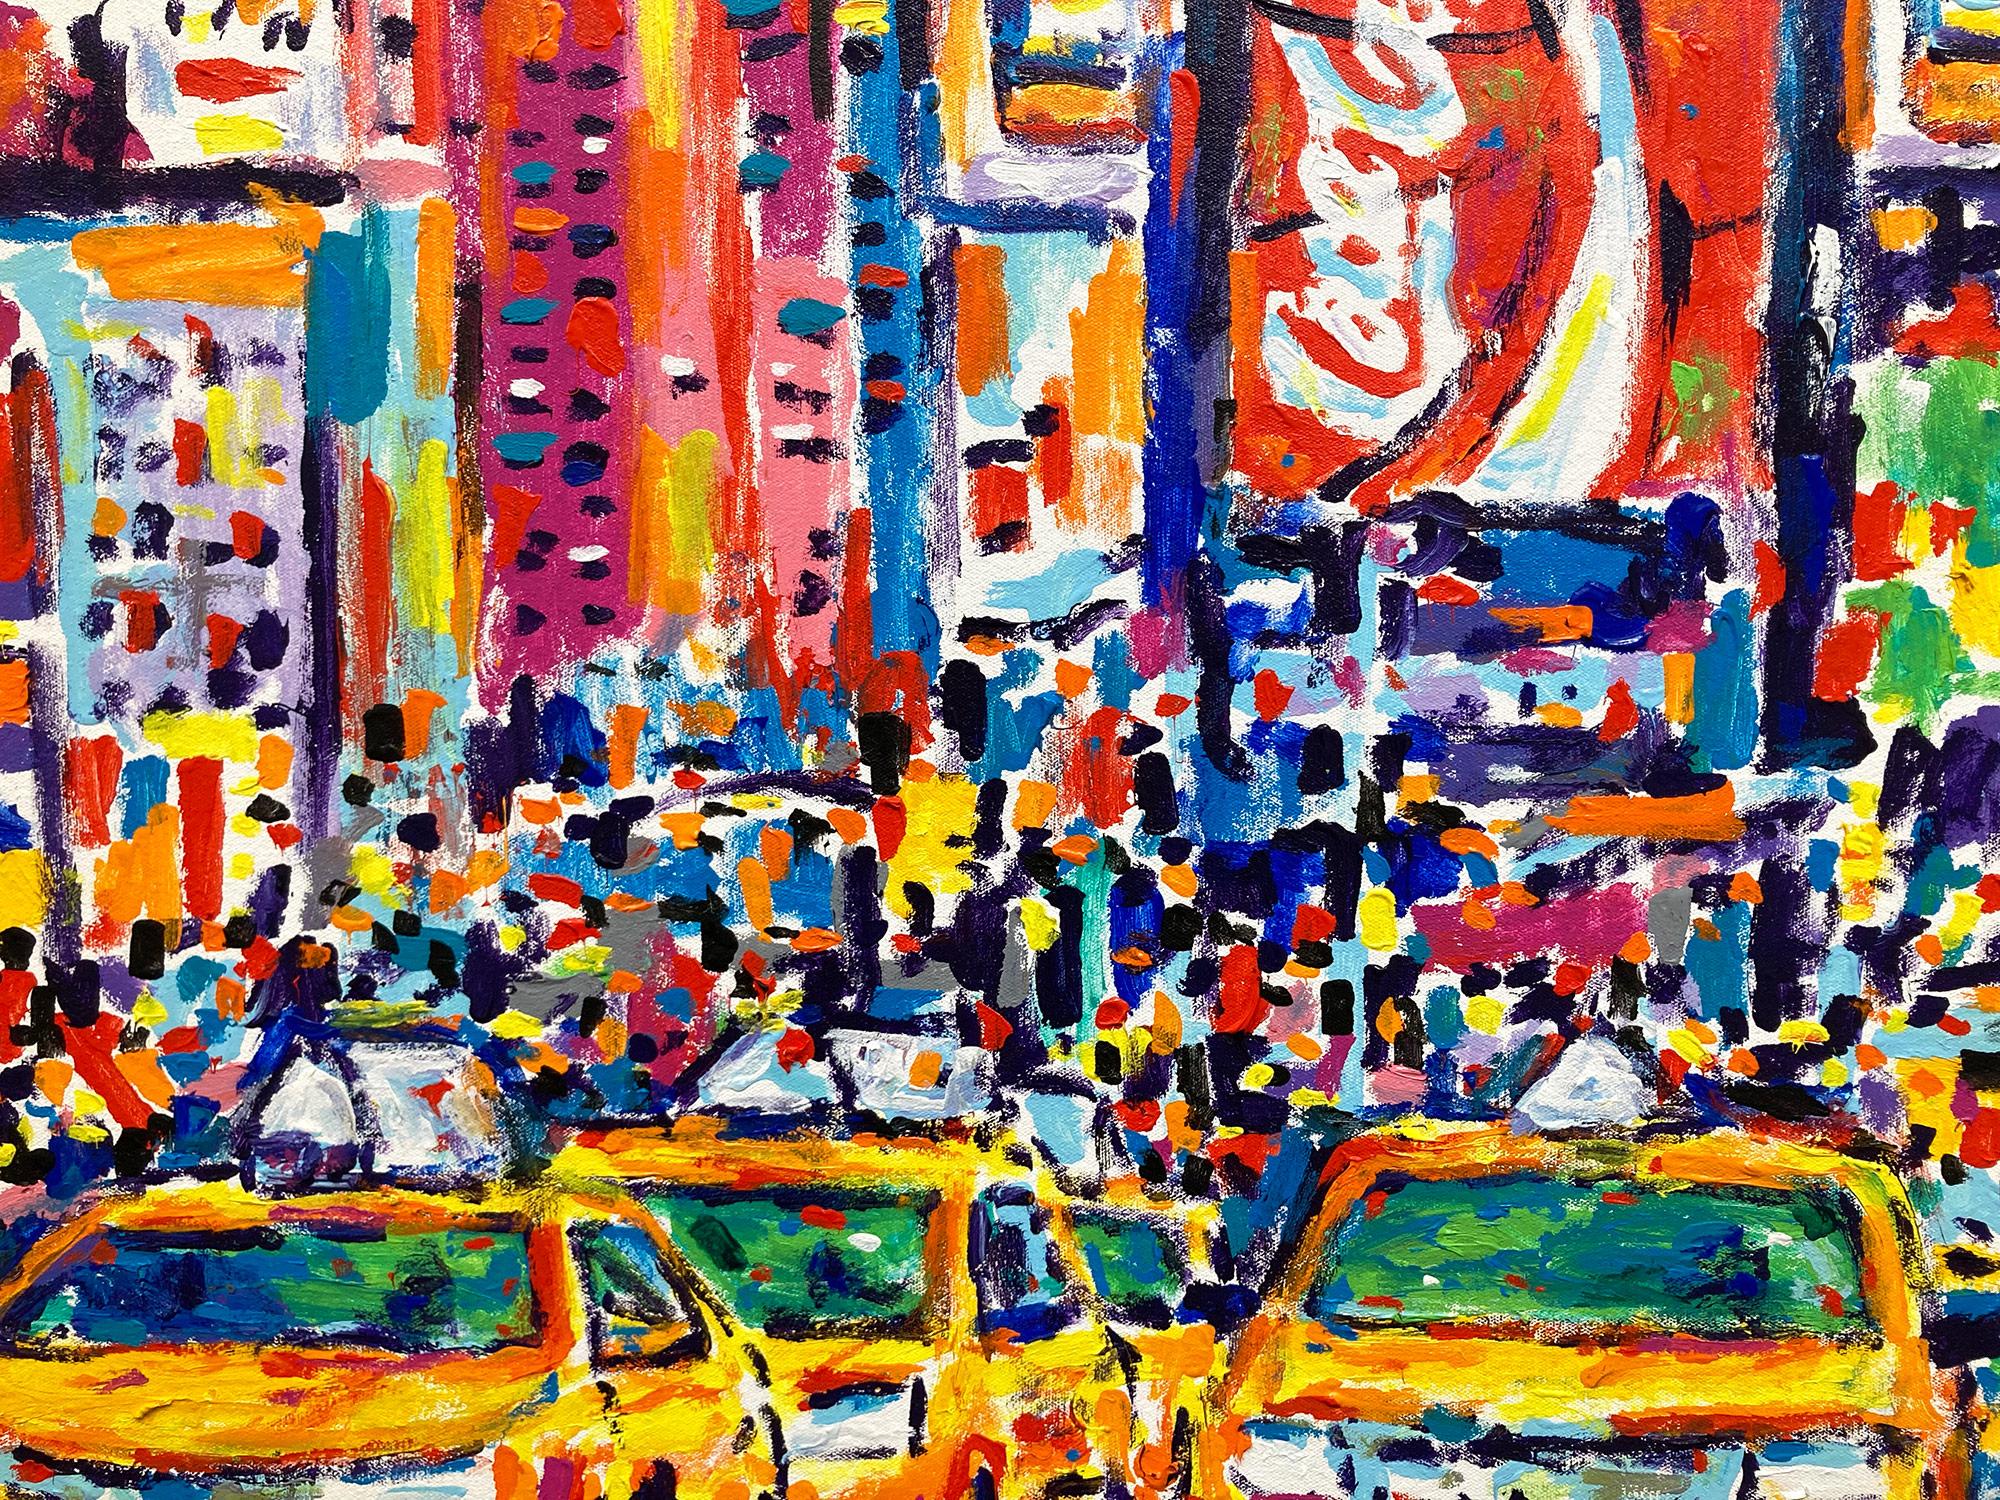 „Times Square“ Buntes Gemälde auf Leinwand, Midtown Manhattan, NYC, farbenfrohe Pop-Art-Szene – Painting von John Stango